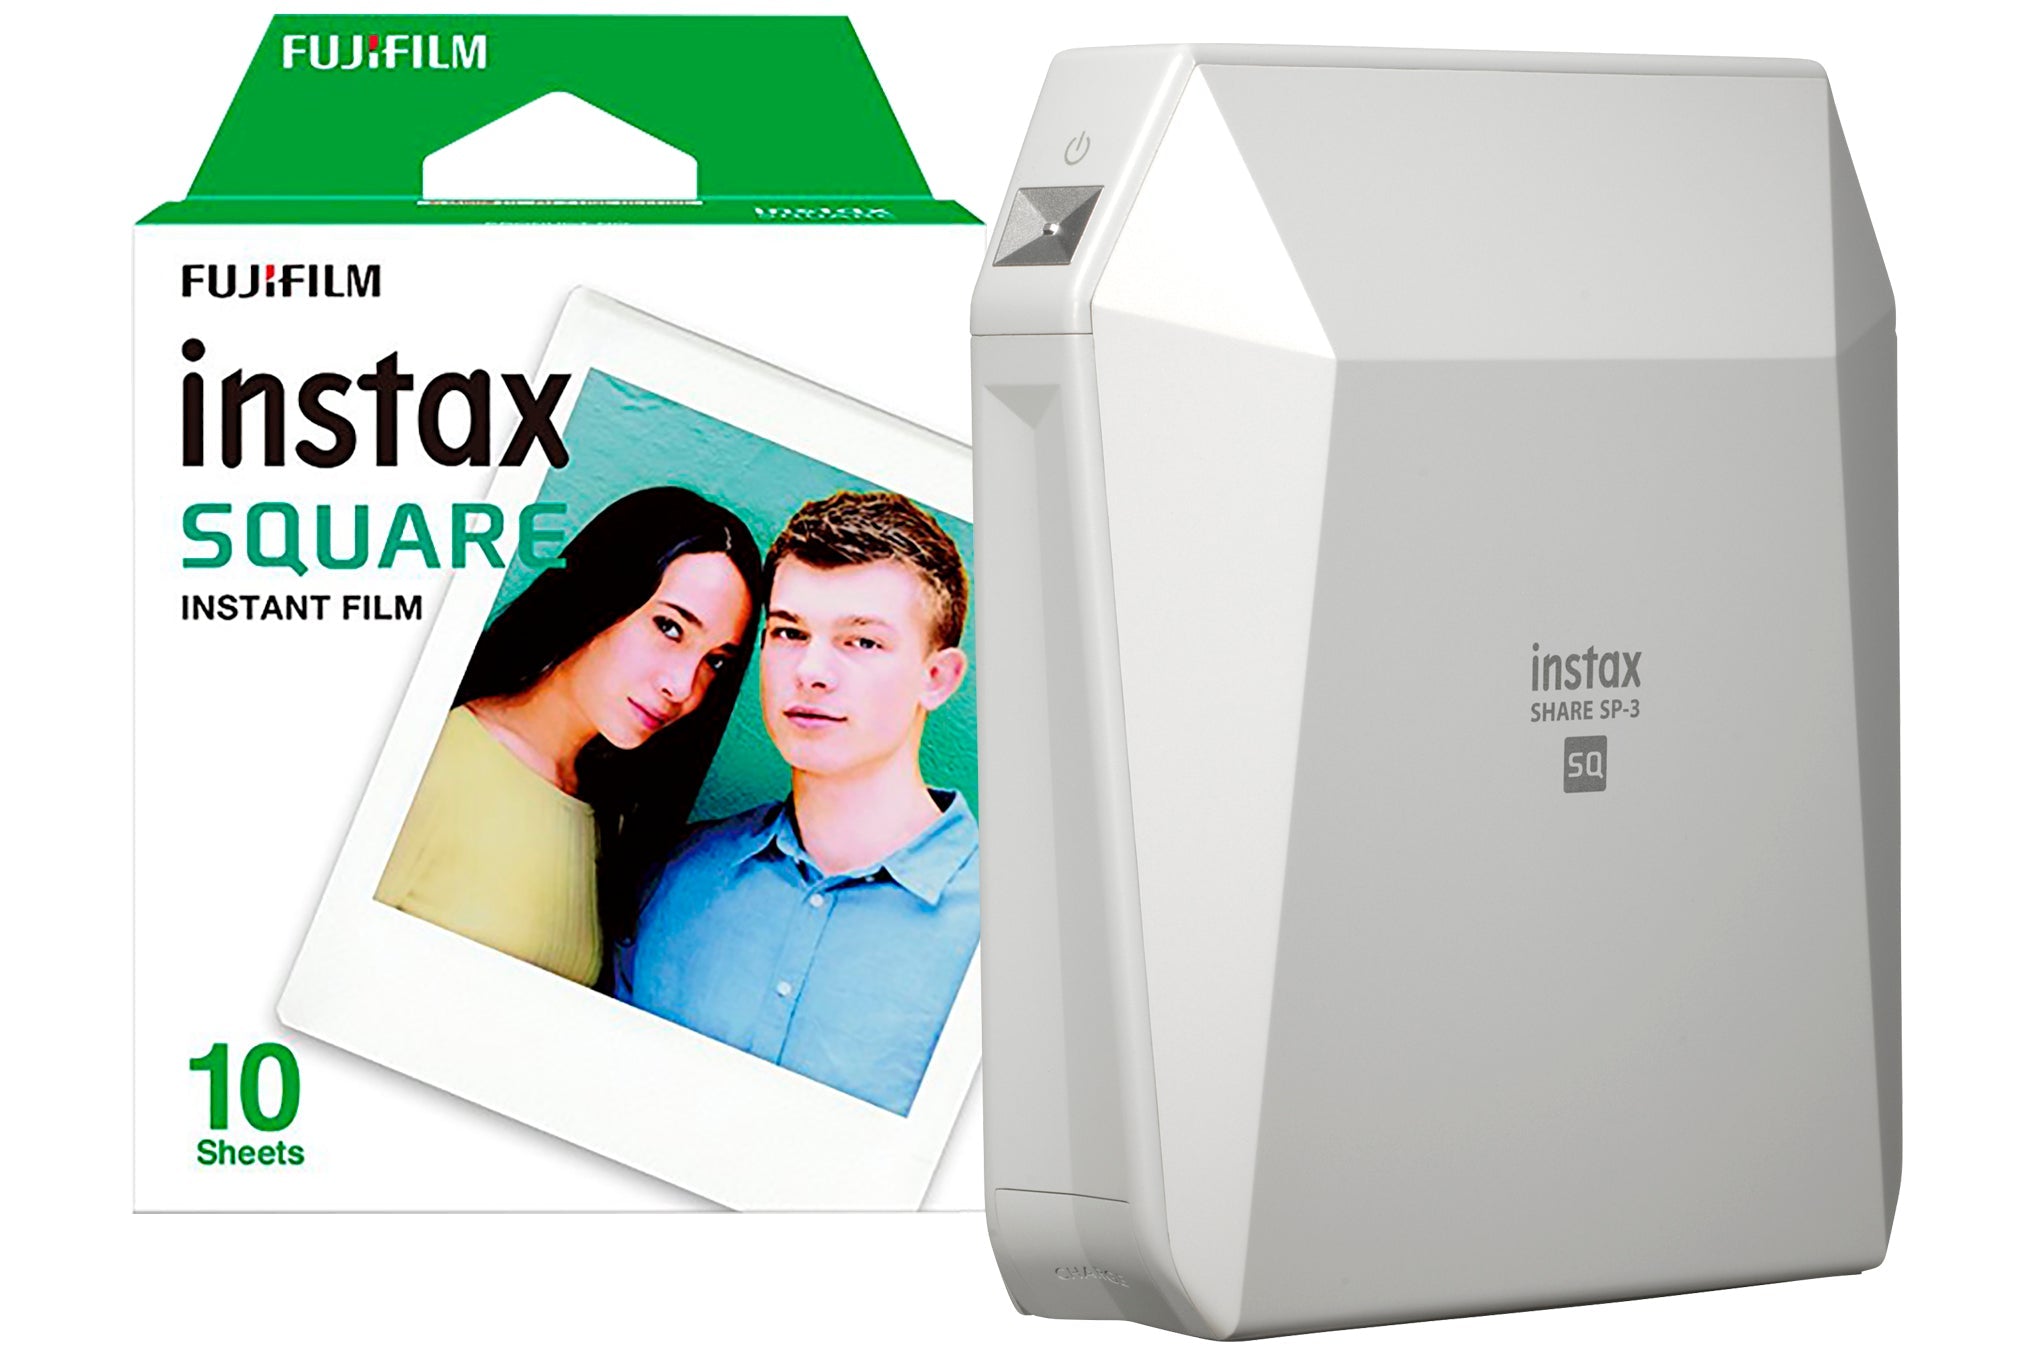 Fujifilm Instax SP-3 Share Square Wireless Photo Printer - White (Printer + 20 Shot Pack)